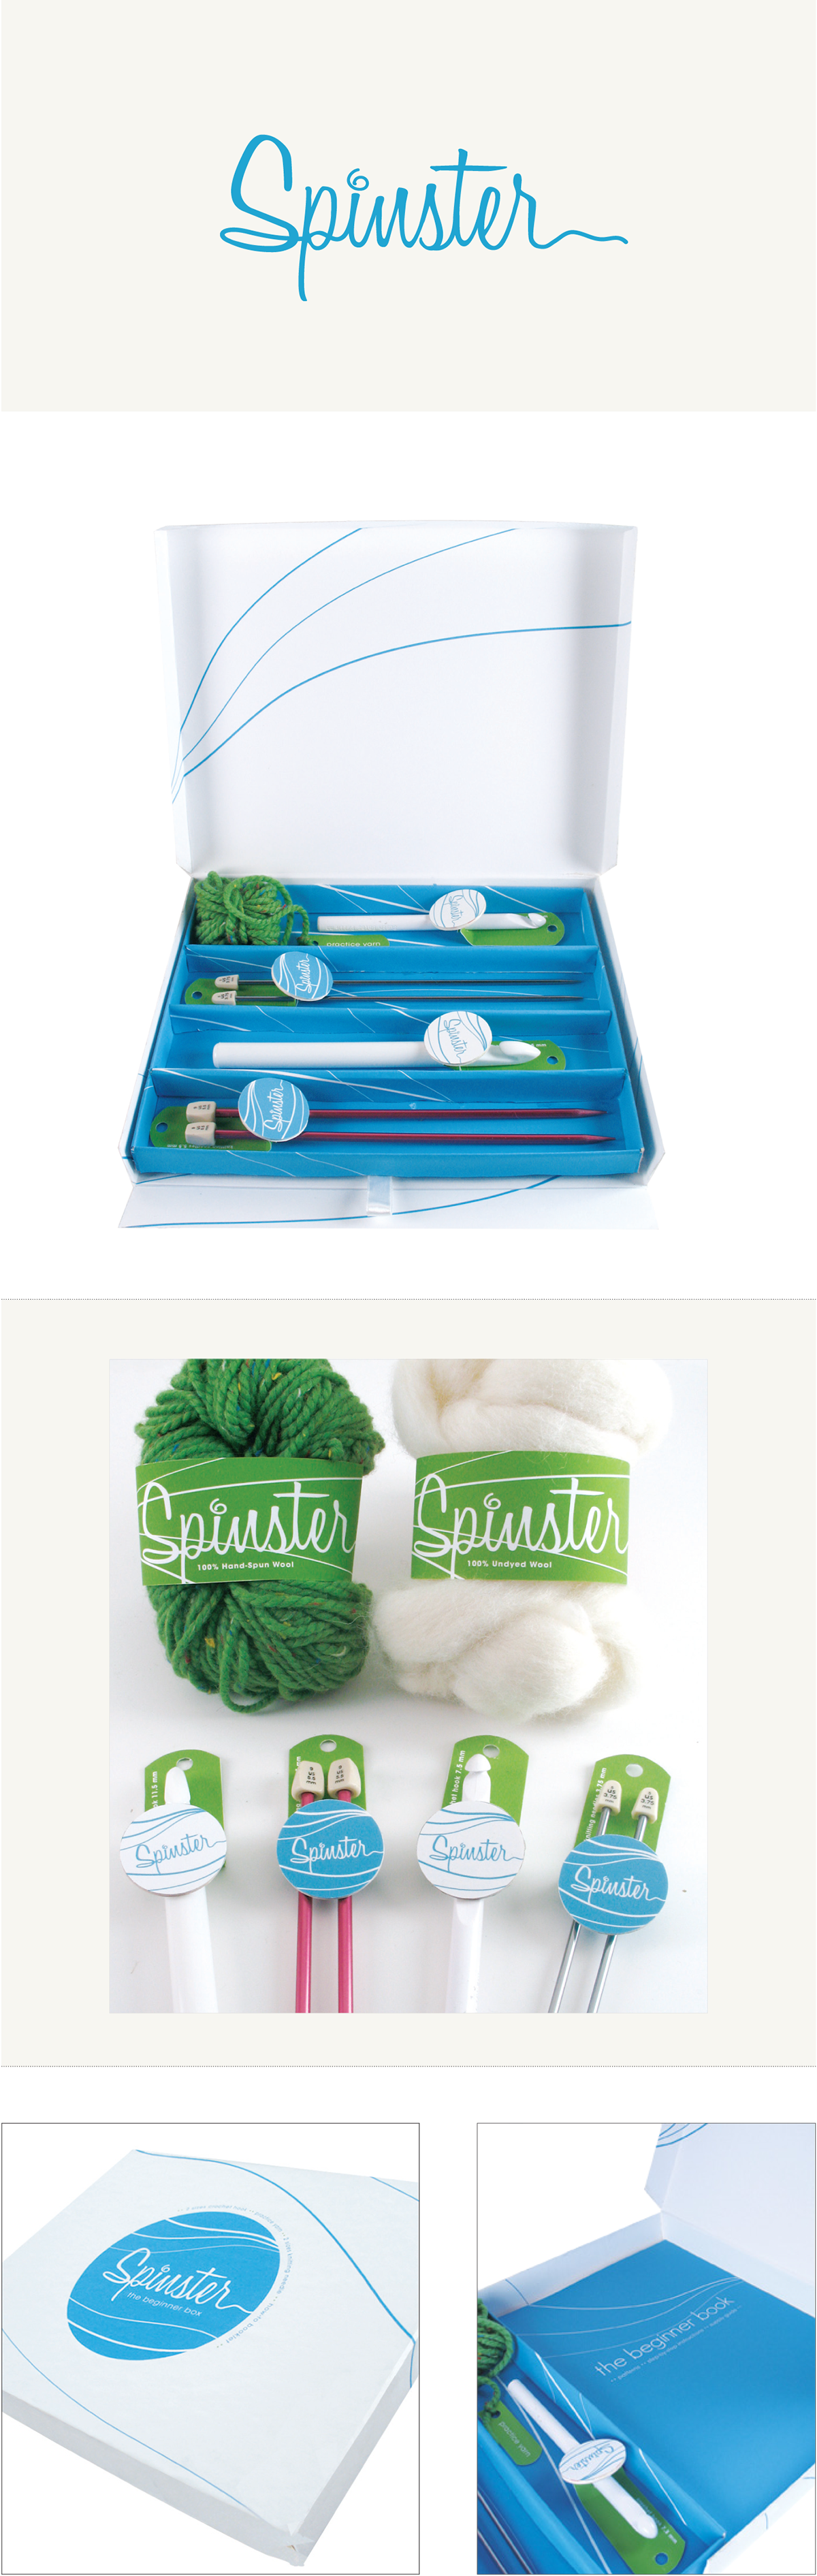 #Knitting #package design 